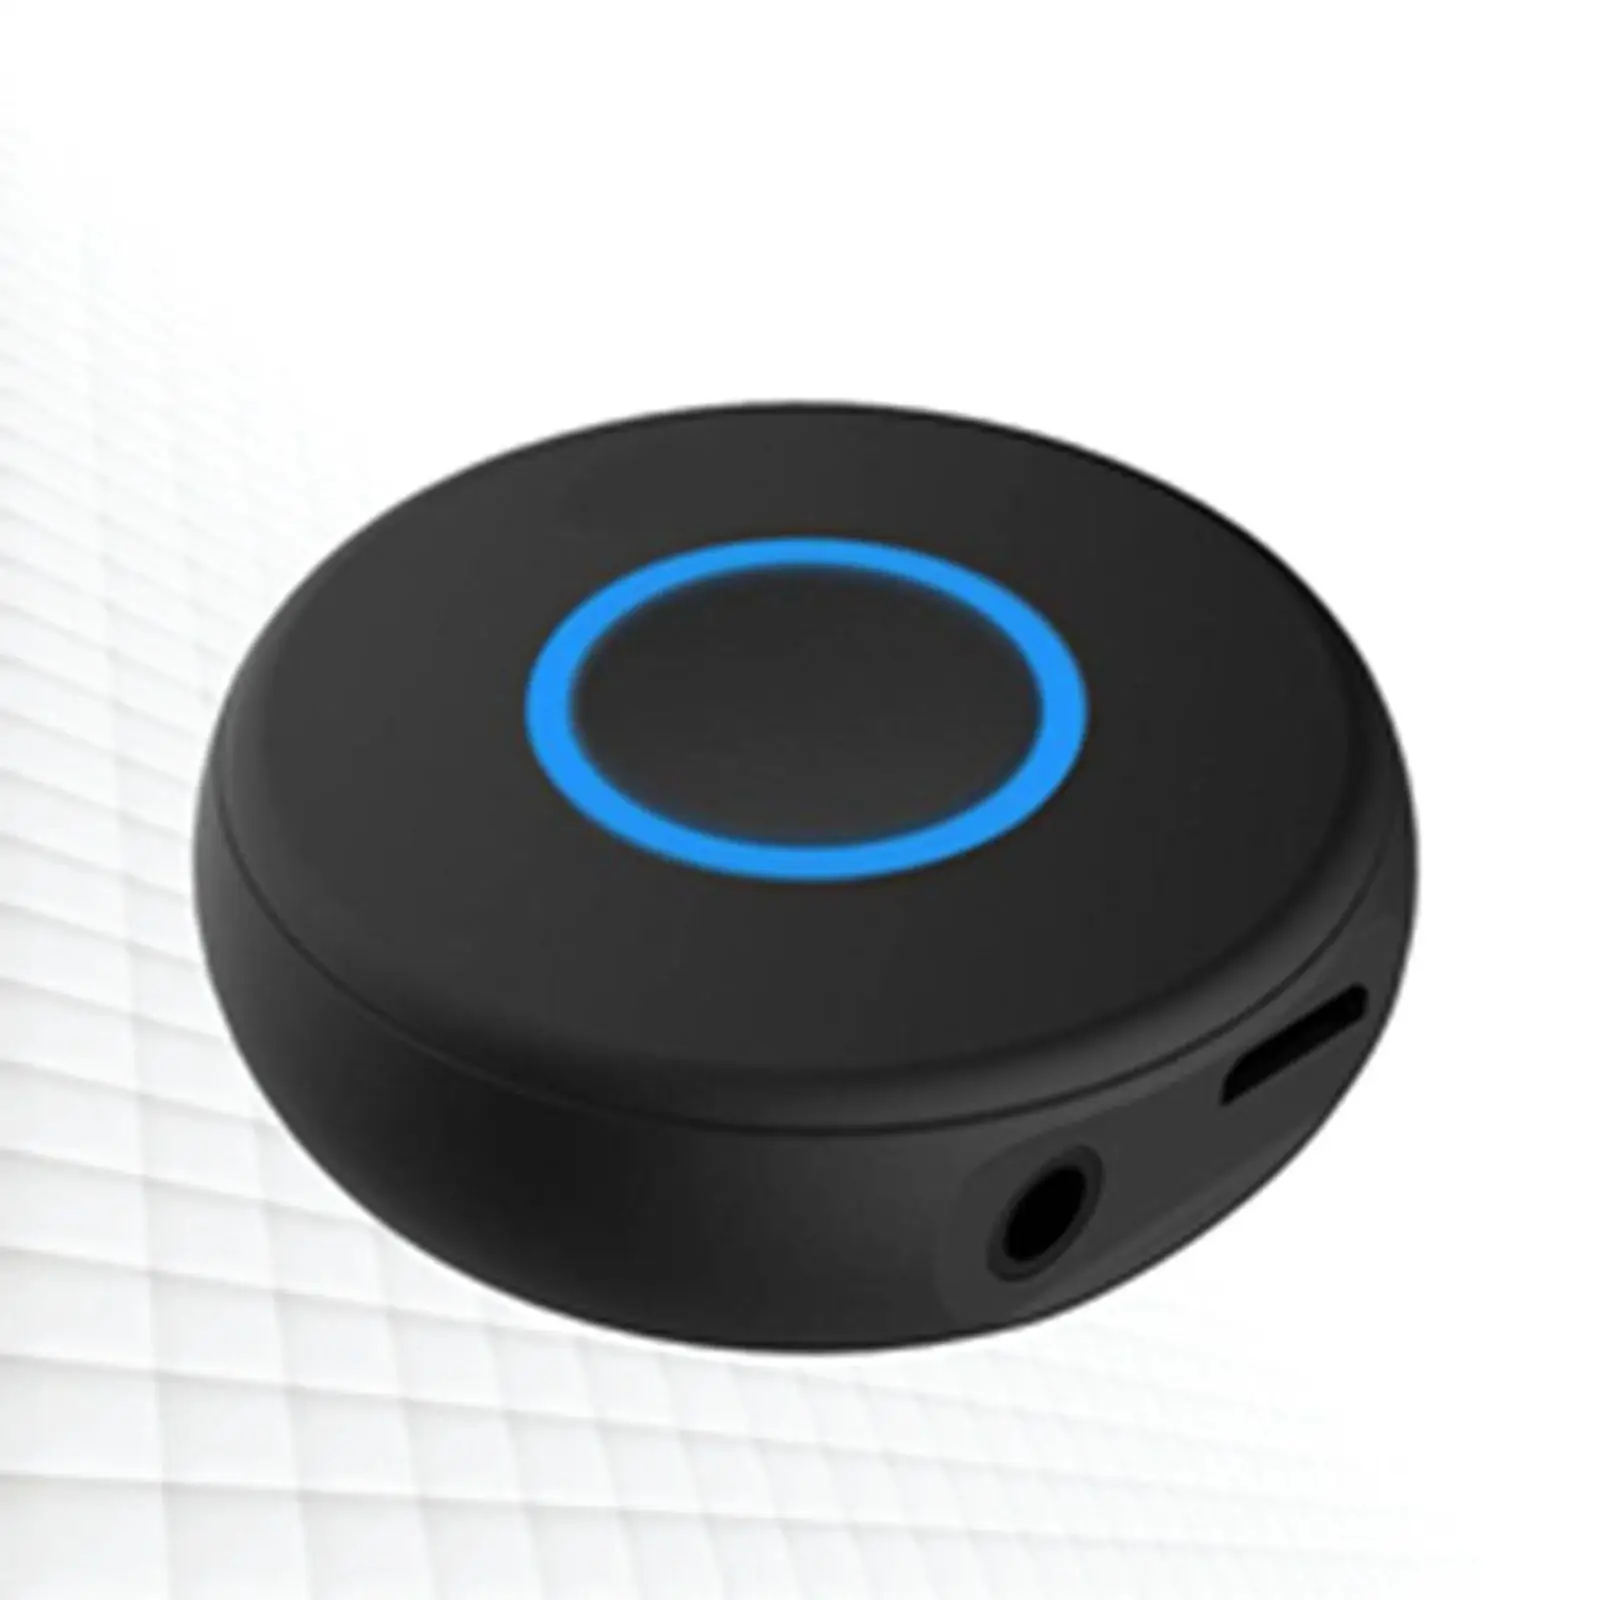 Bluetooth Adapter Transmitter No Audio Delay for TV Headphones Speaker PC